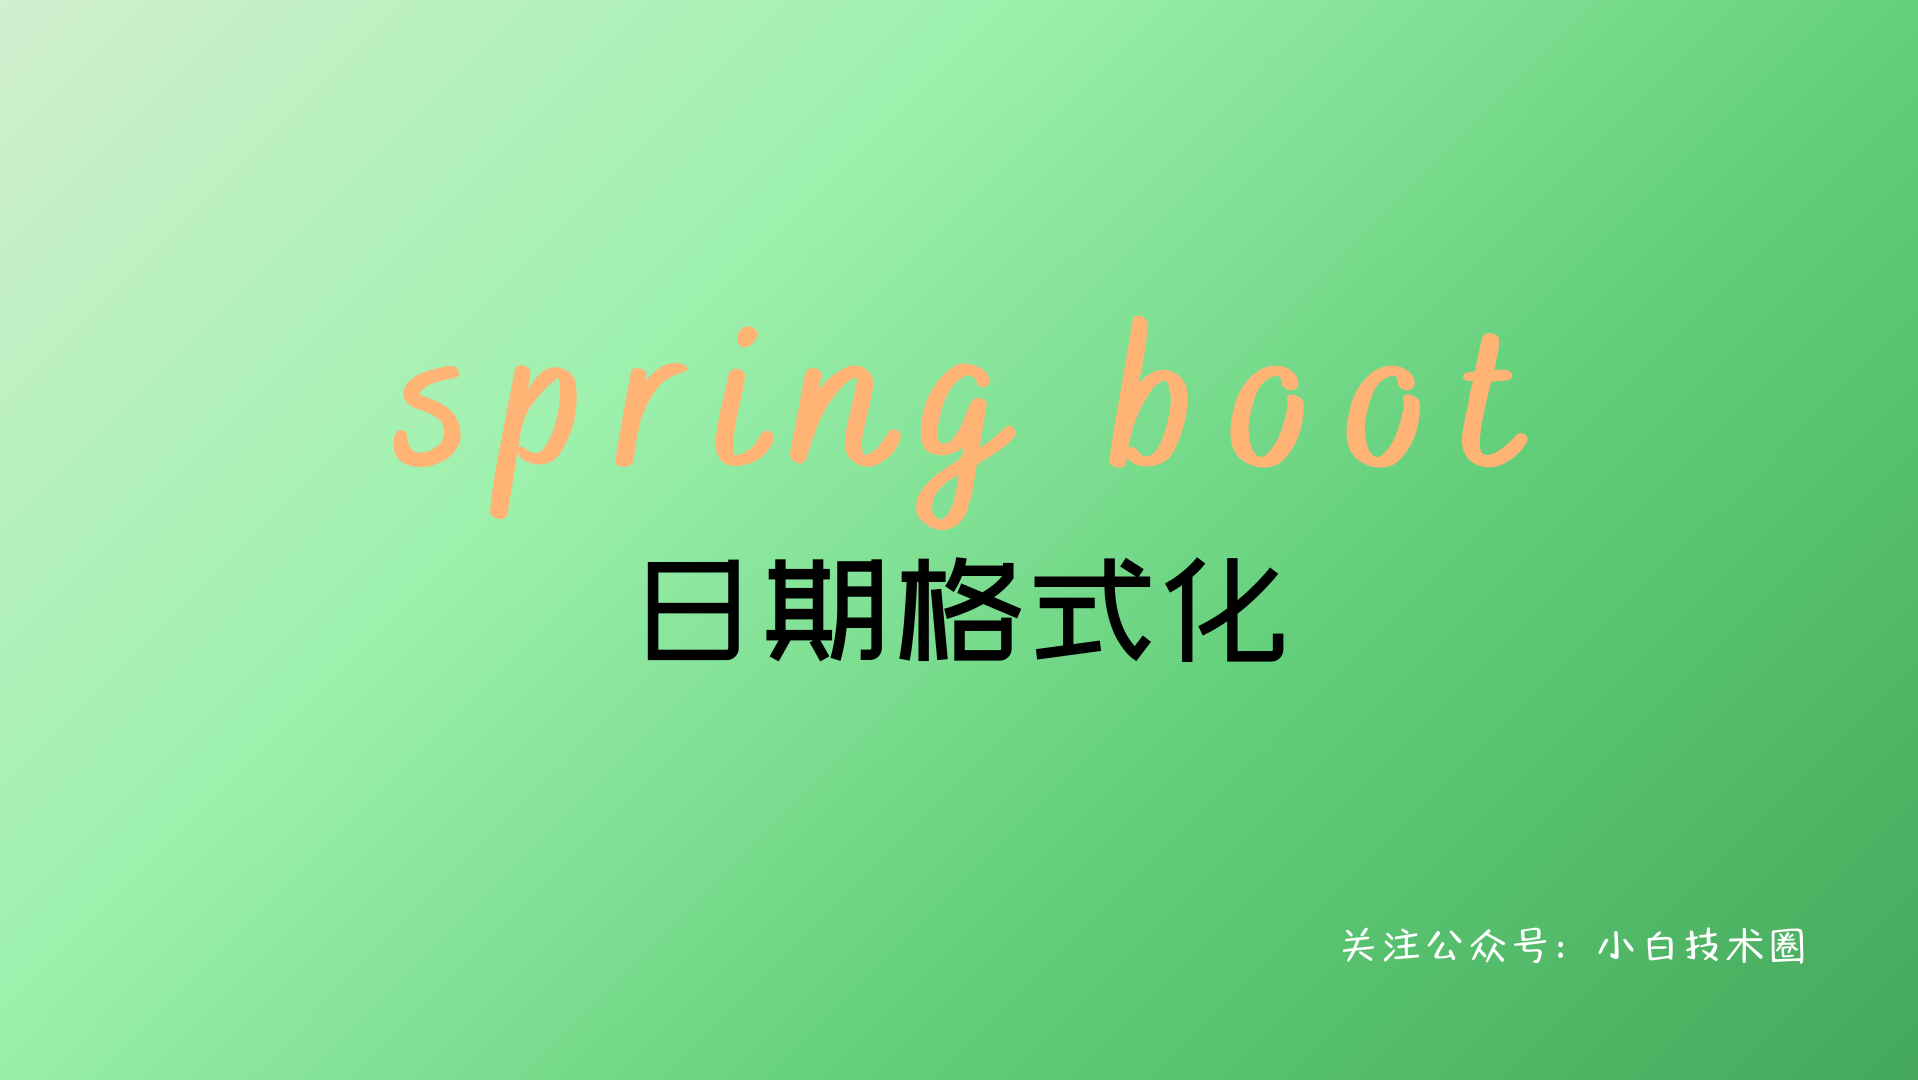 Spring Boot 日期格式化